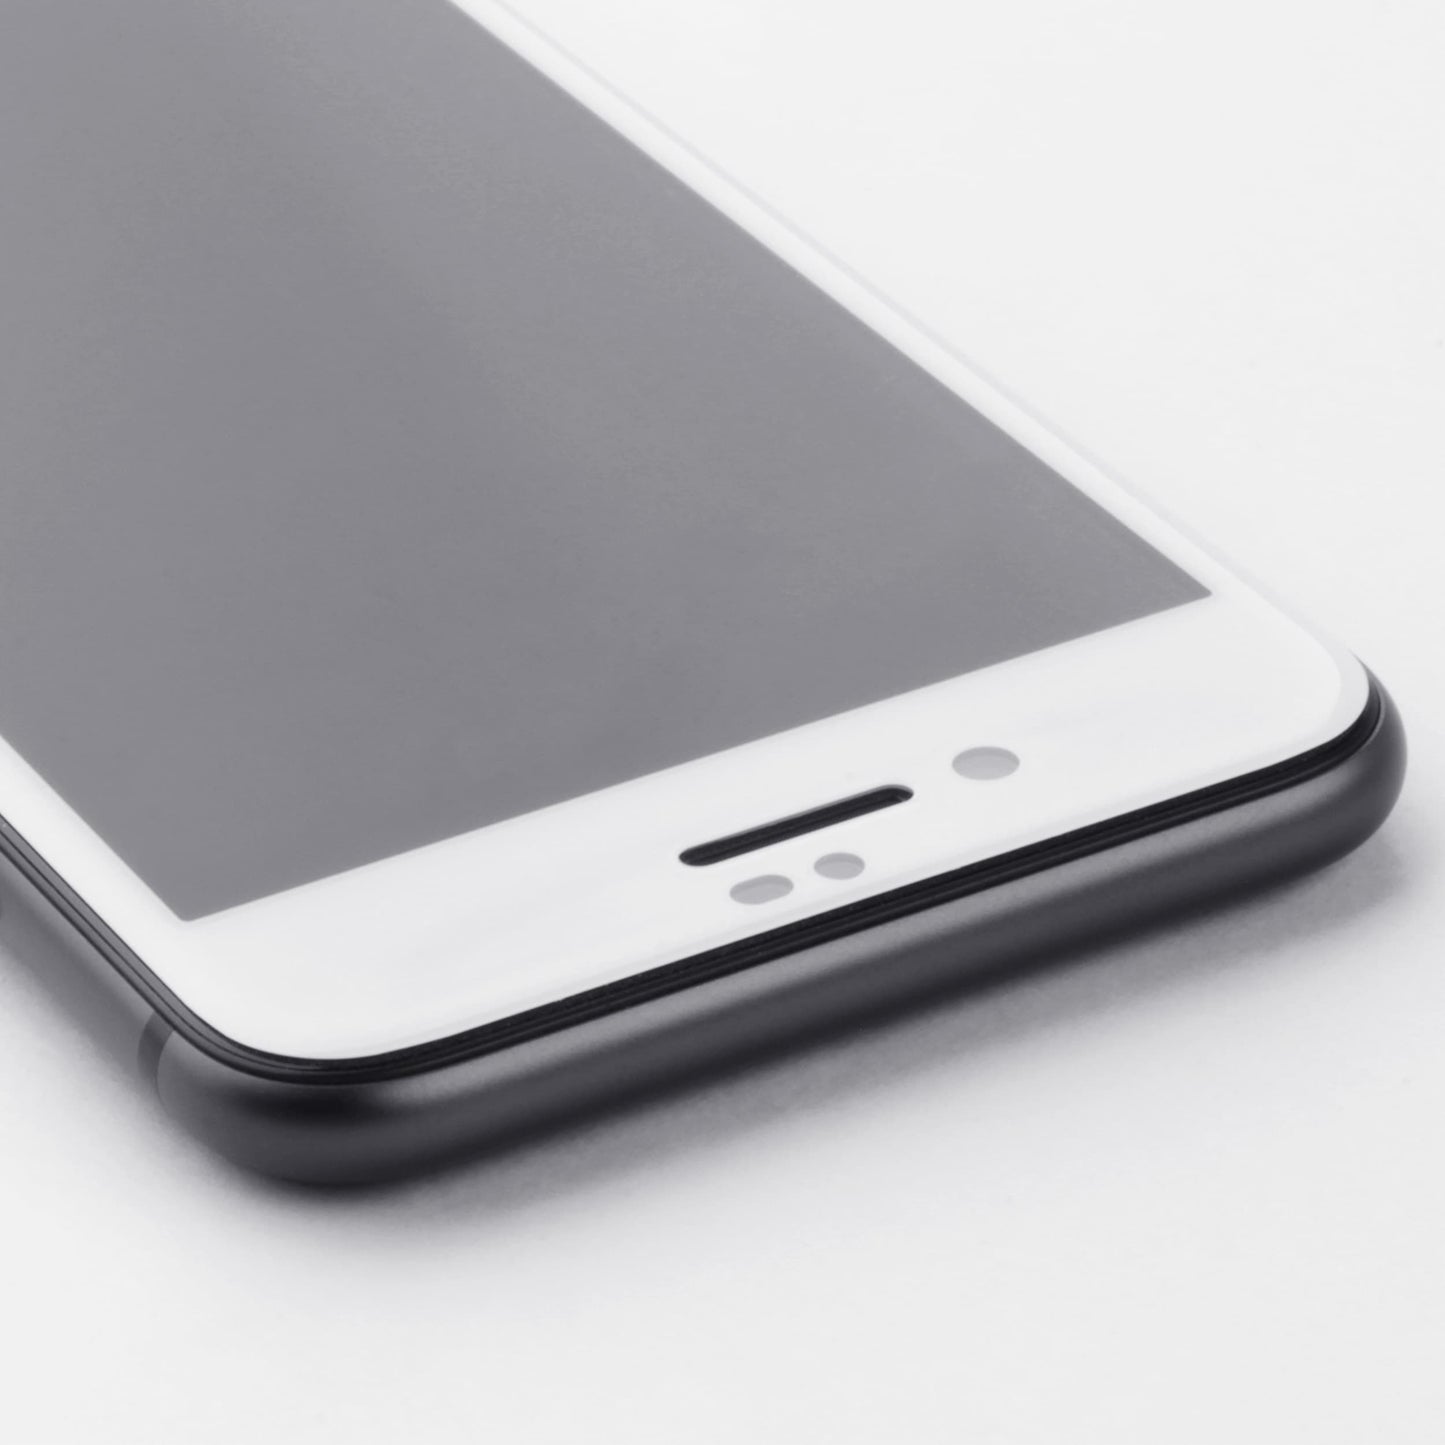 iPhone 8 Plus - sapphire glass